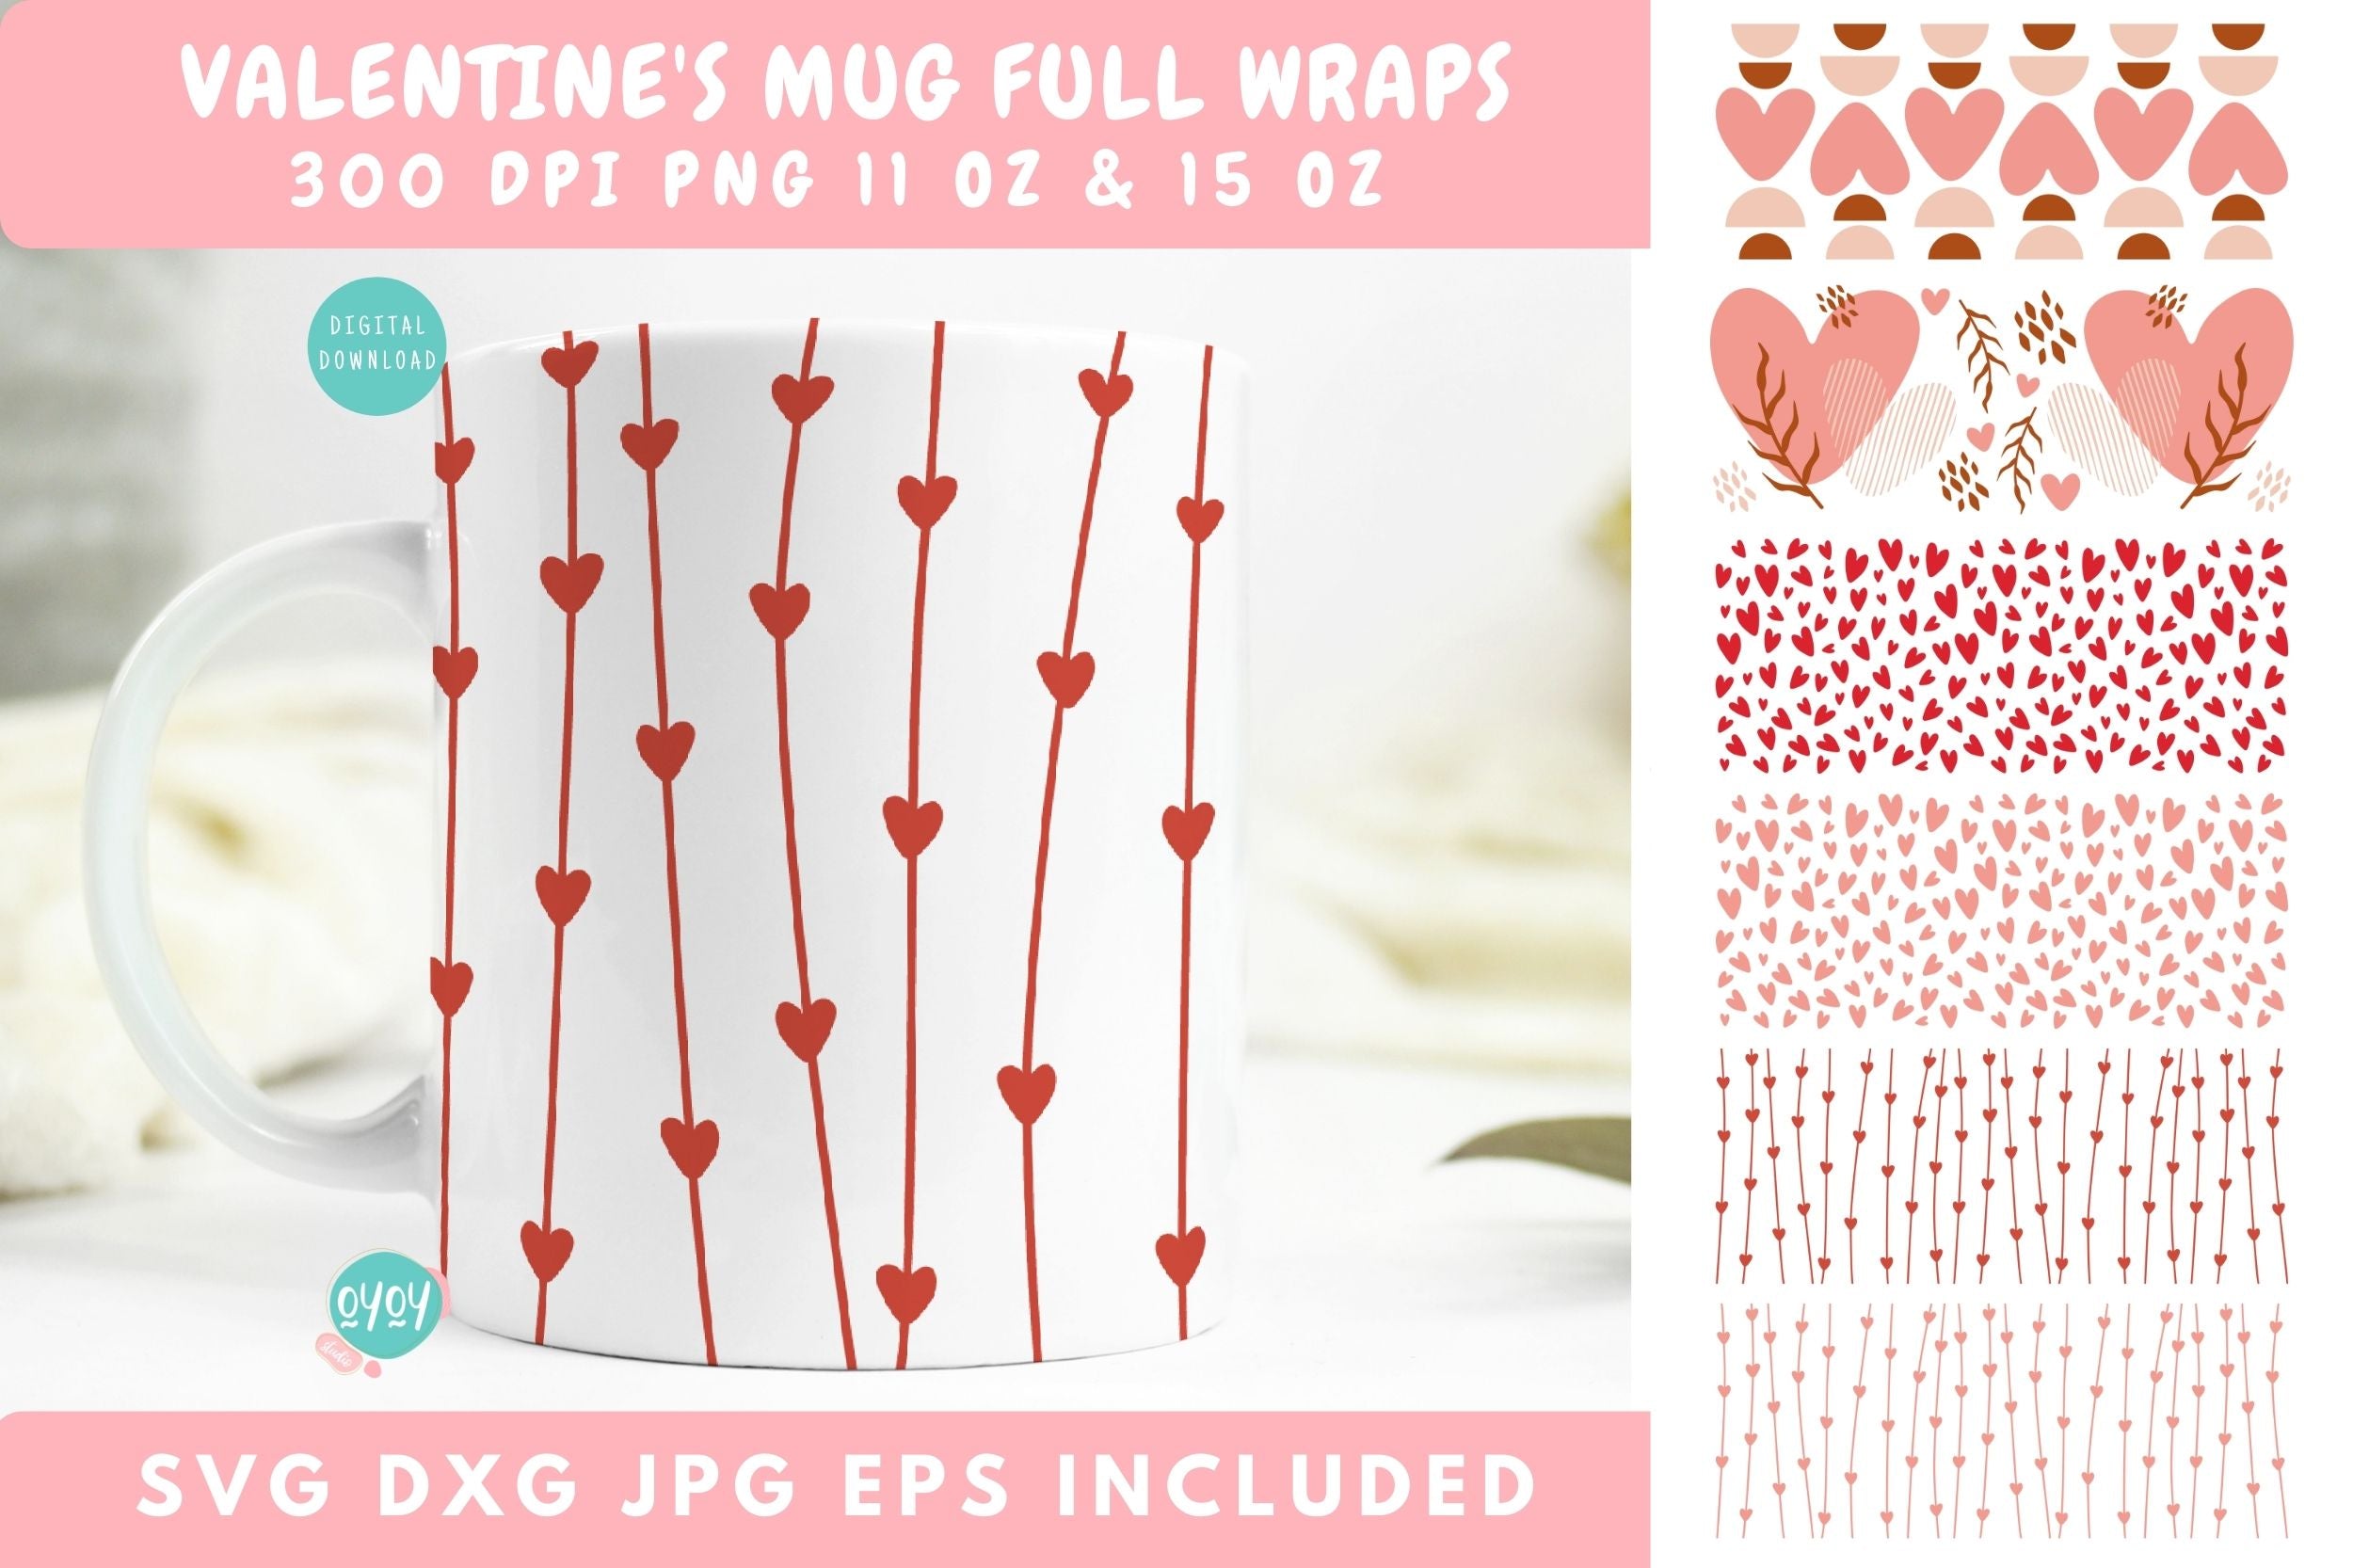 Valentine Hearts Bundle, 11 Oz Mug Sublimation Designs With